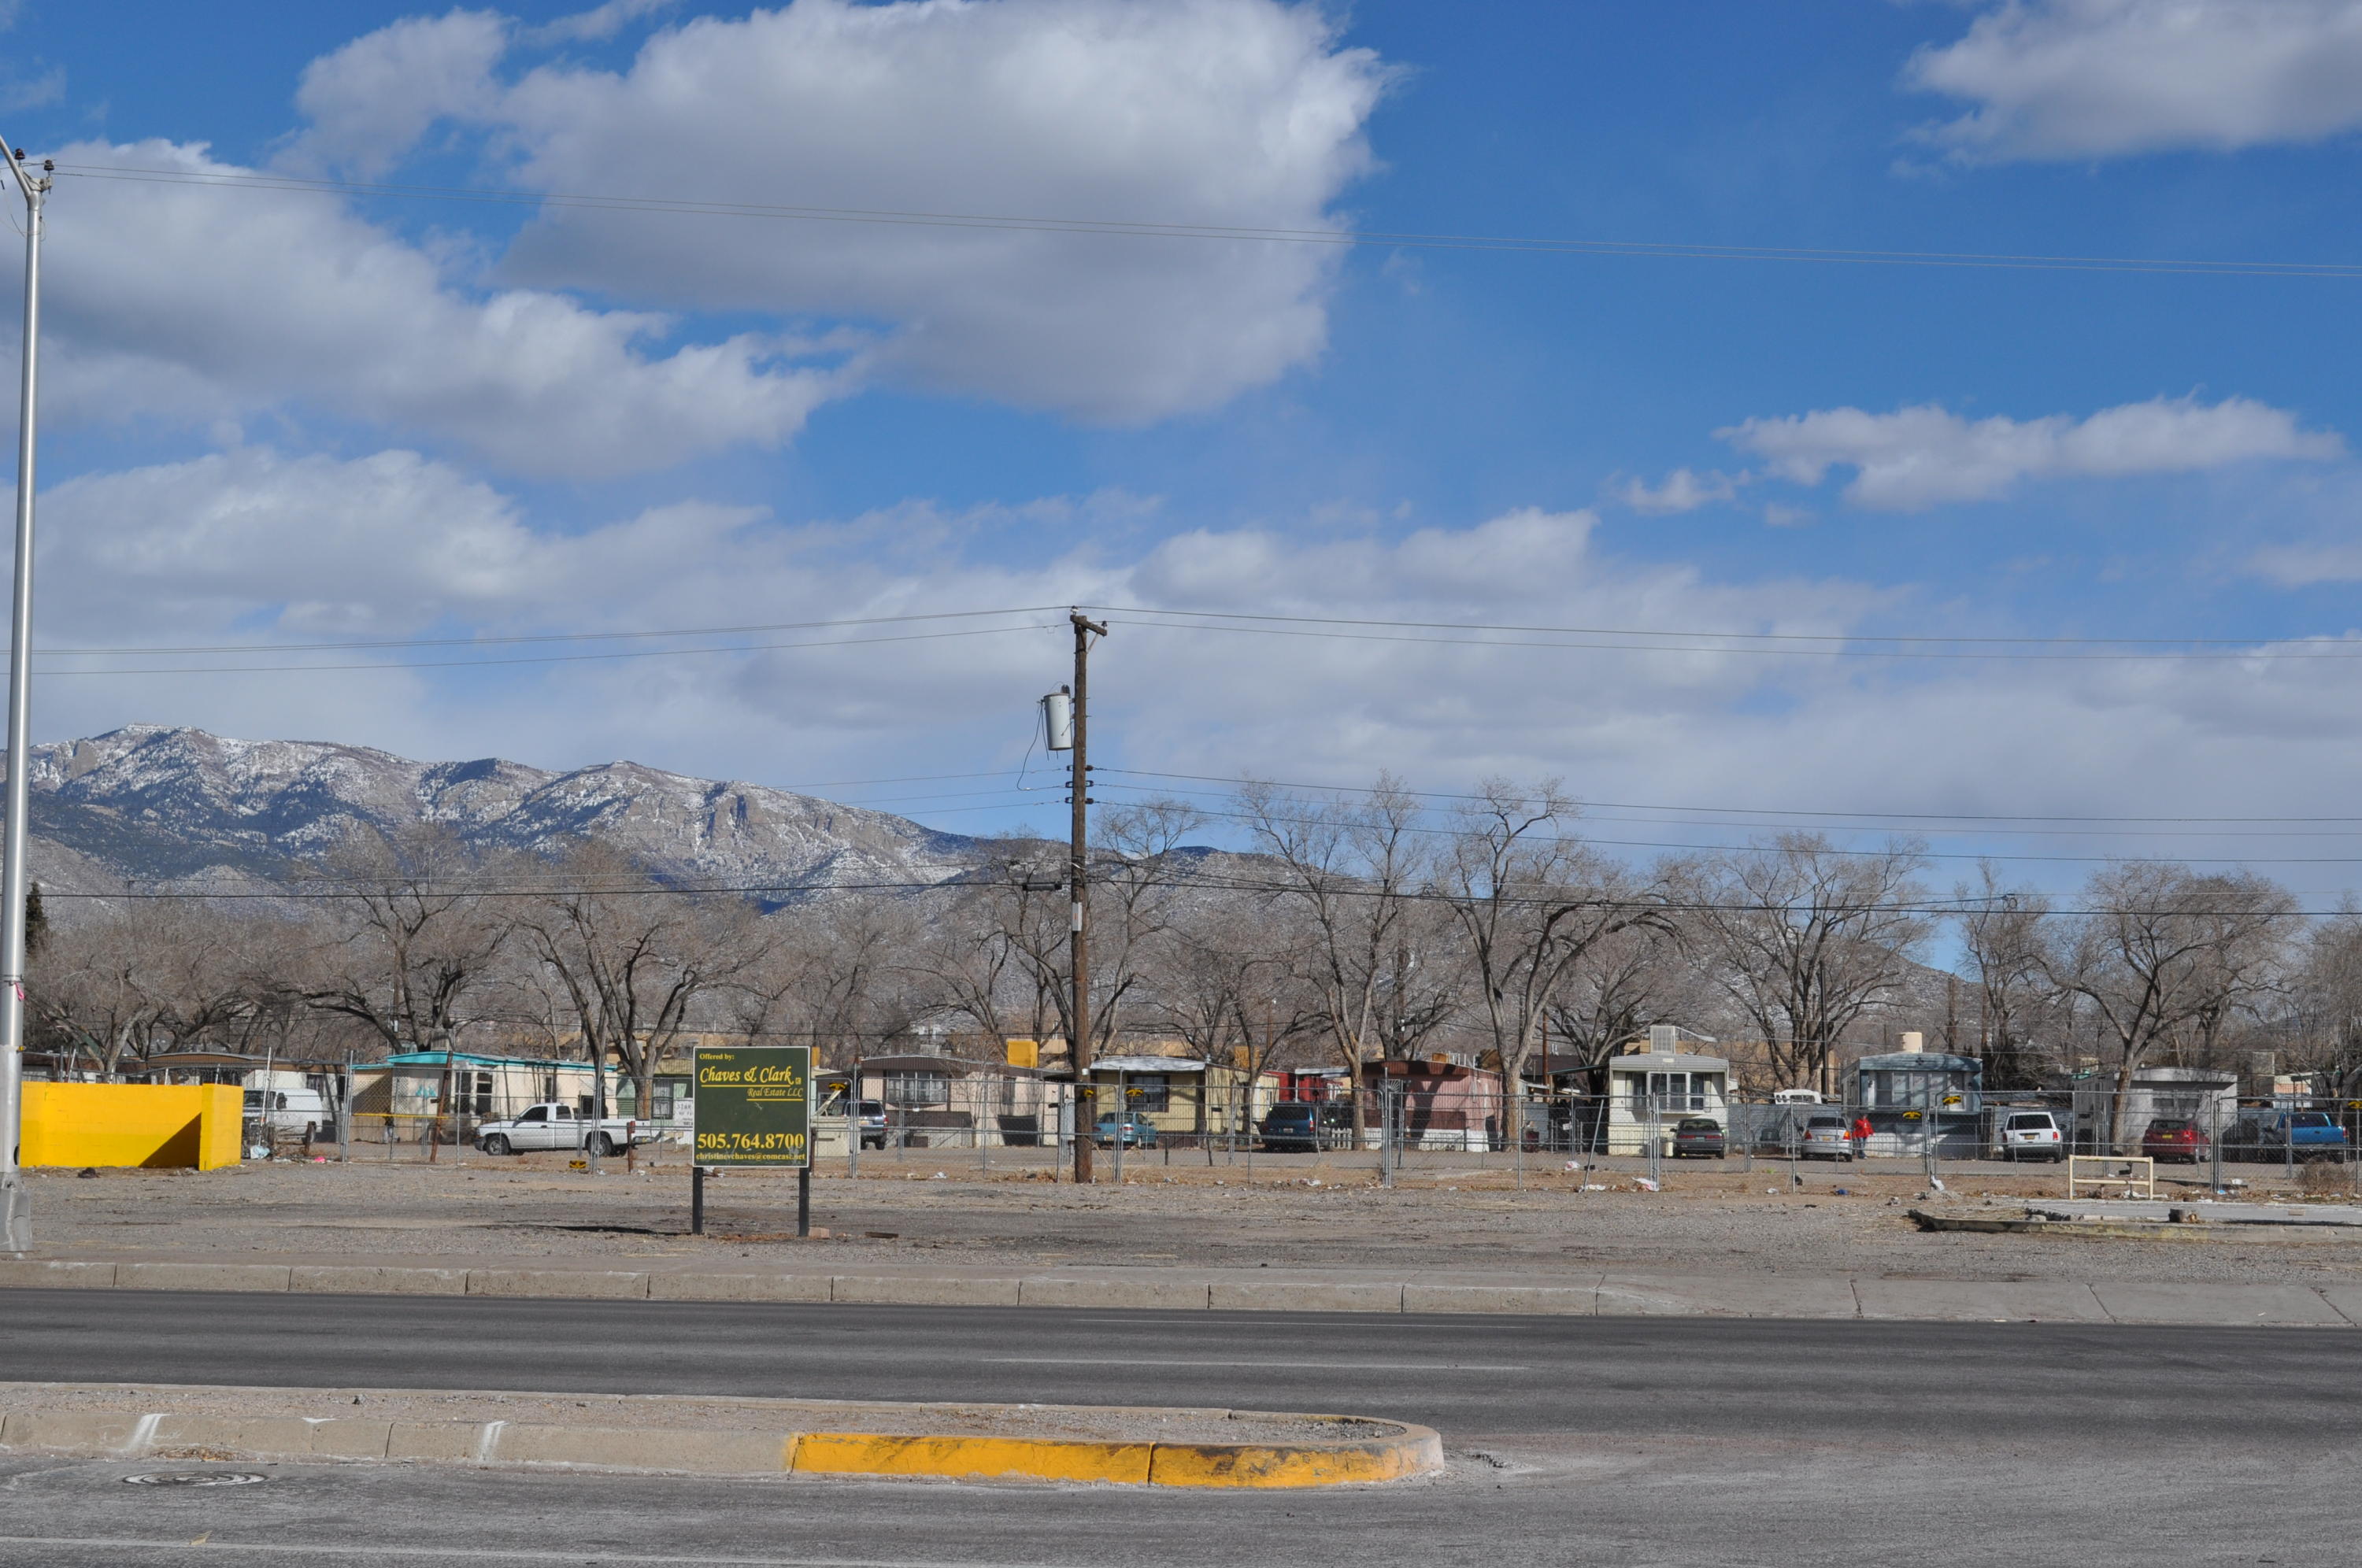 114-156 WYOMING Boulevard NE, Albuquerque, New Mexico 87123, ,Commercial Lease,For Rent,114-156 WYOMING Boulevard NE,924183